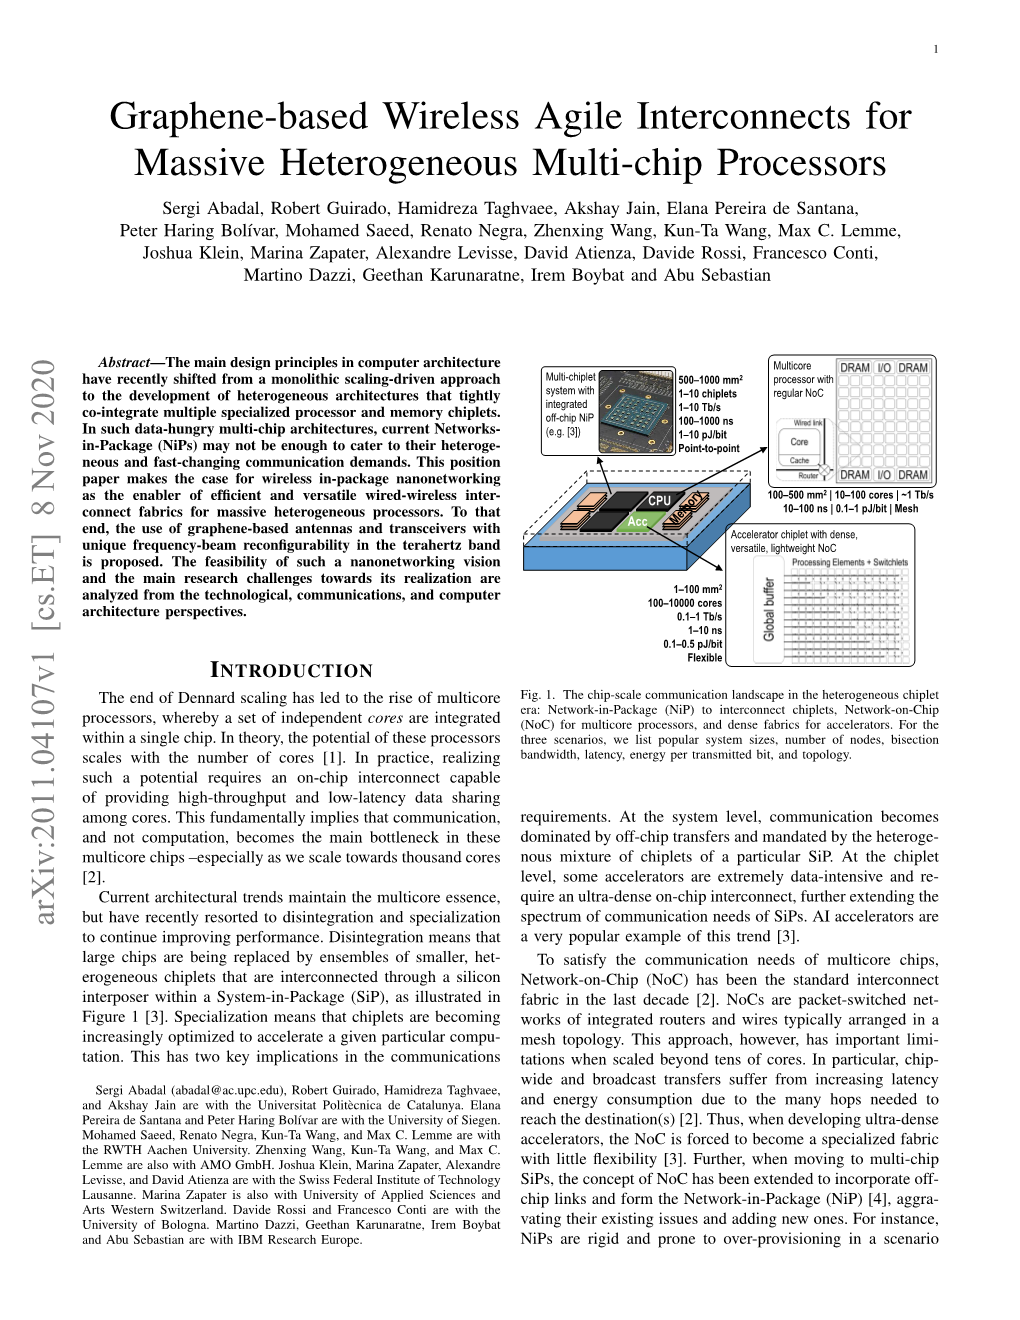 Graphene-Based Wireless Agile Interconnects for Massive Heterogeneous Multi-Chip Processors